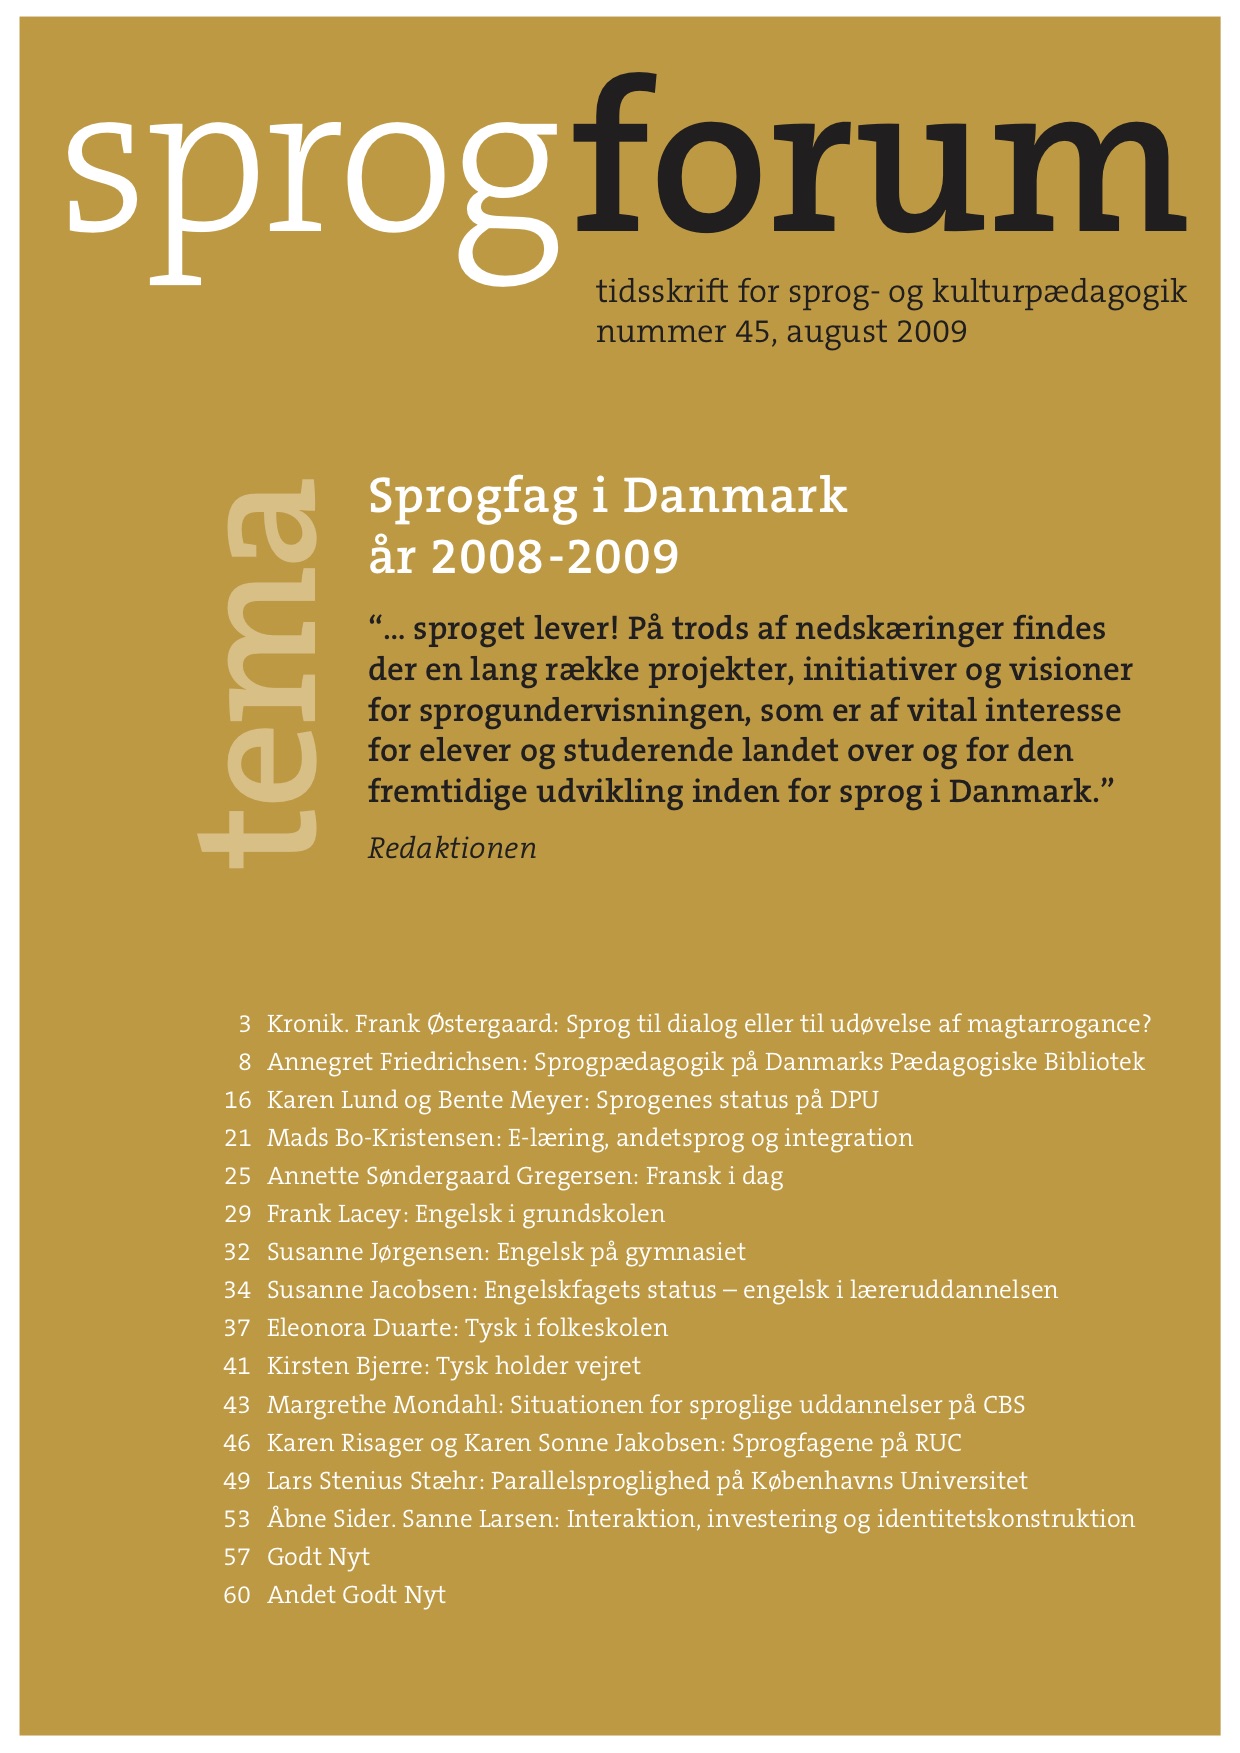 					Se Årg. 15 Nr. 45 (2009): Sprogfag i Danmark år 2008-2009
				